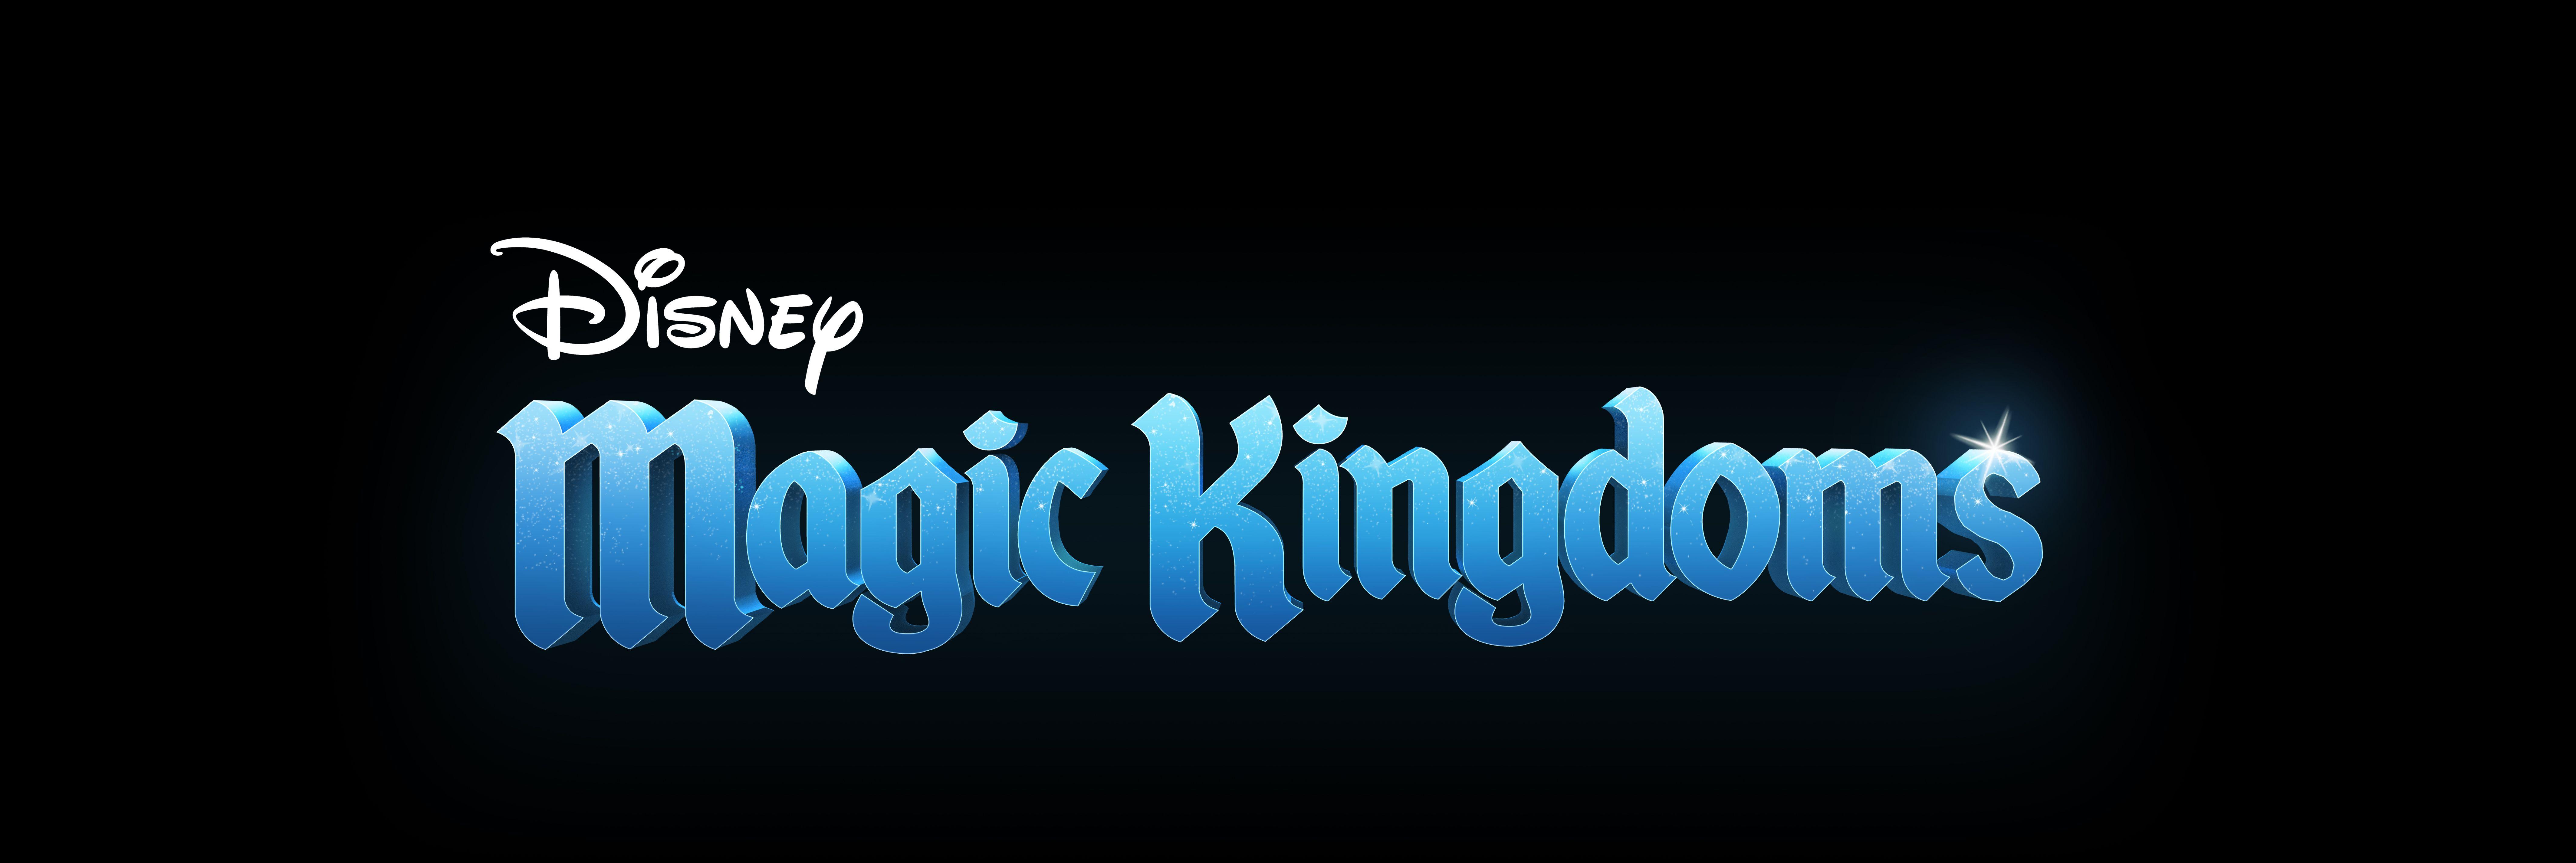 Disney App Logo - Disney Magic Kingdoms Mobile Builder Game Revealed